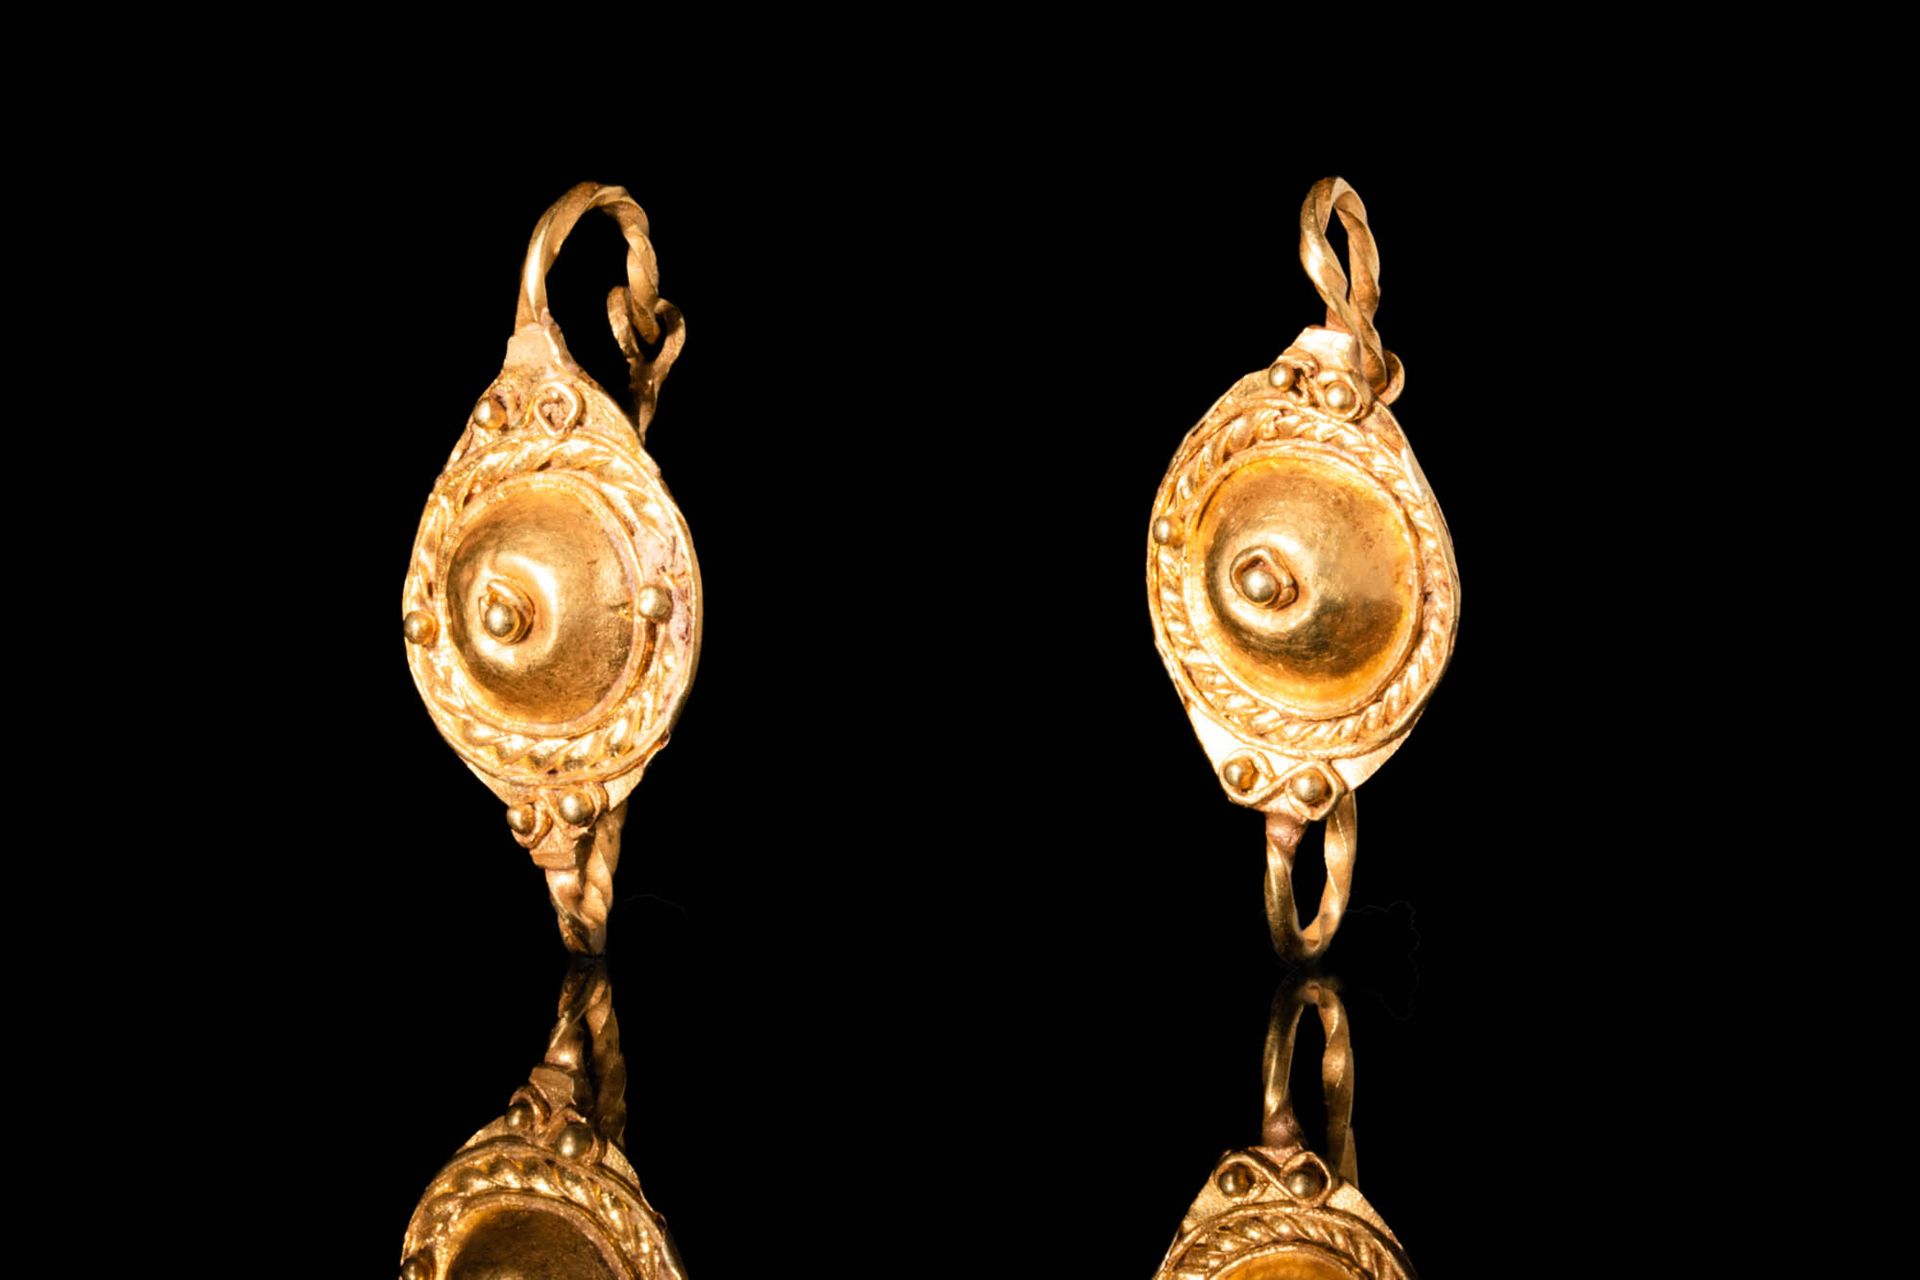 ROMAN GOLD UMBO SHAPE EARRINGS 约公元 200 - 300 年。公元 200 - 300 年。
一对罗马金耳环。每个耳环都有一个大&hellip;